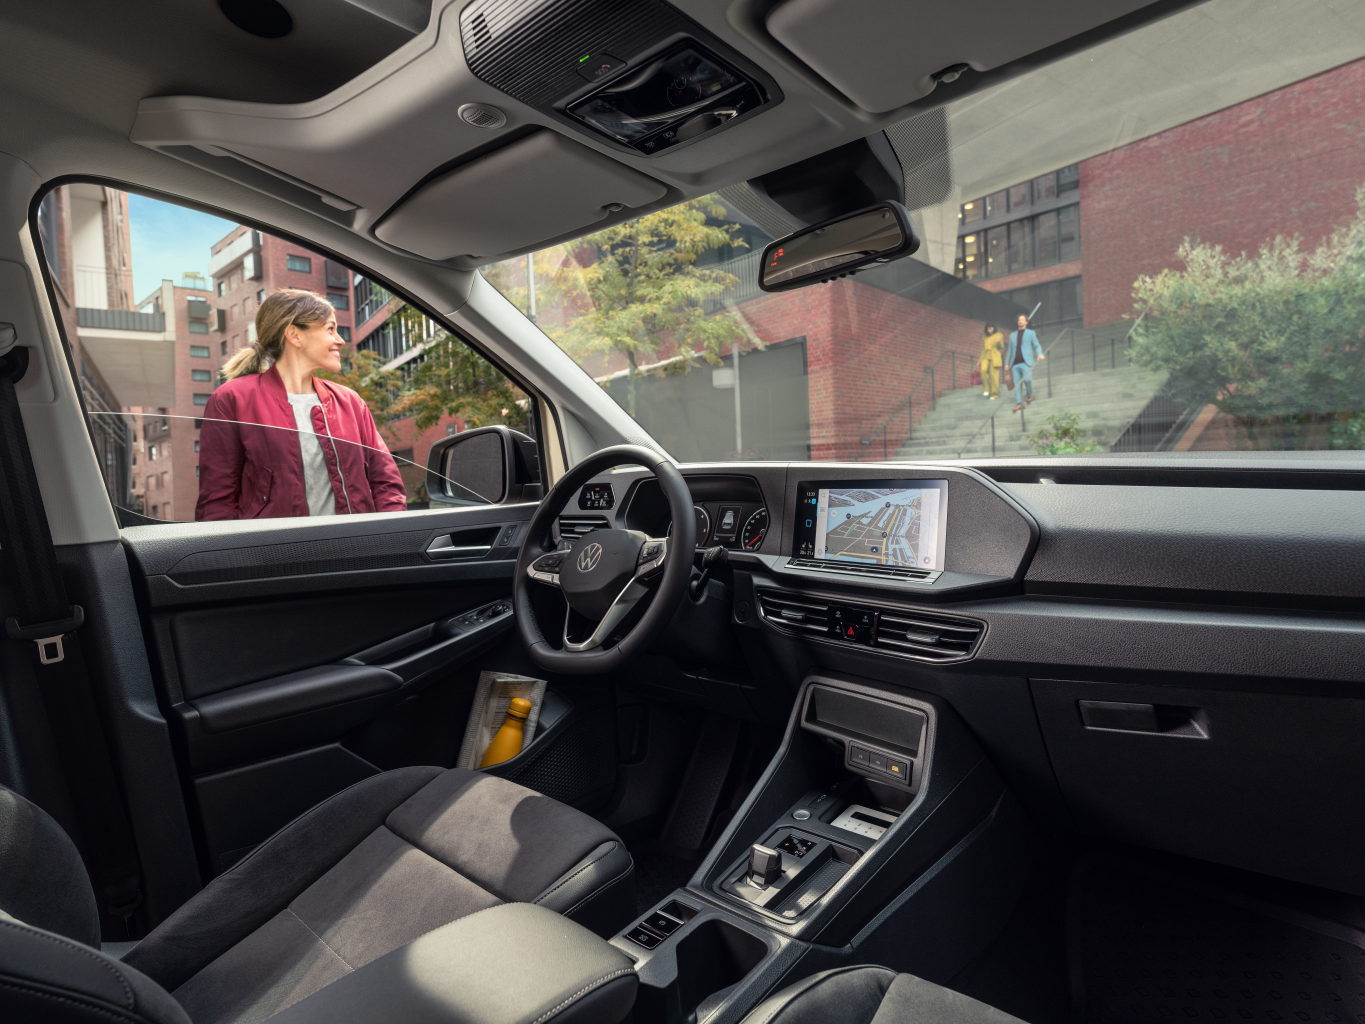 Vehículo interior VW - Retrovisor